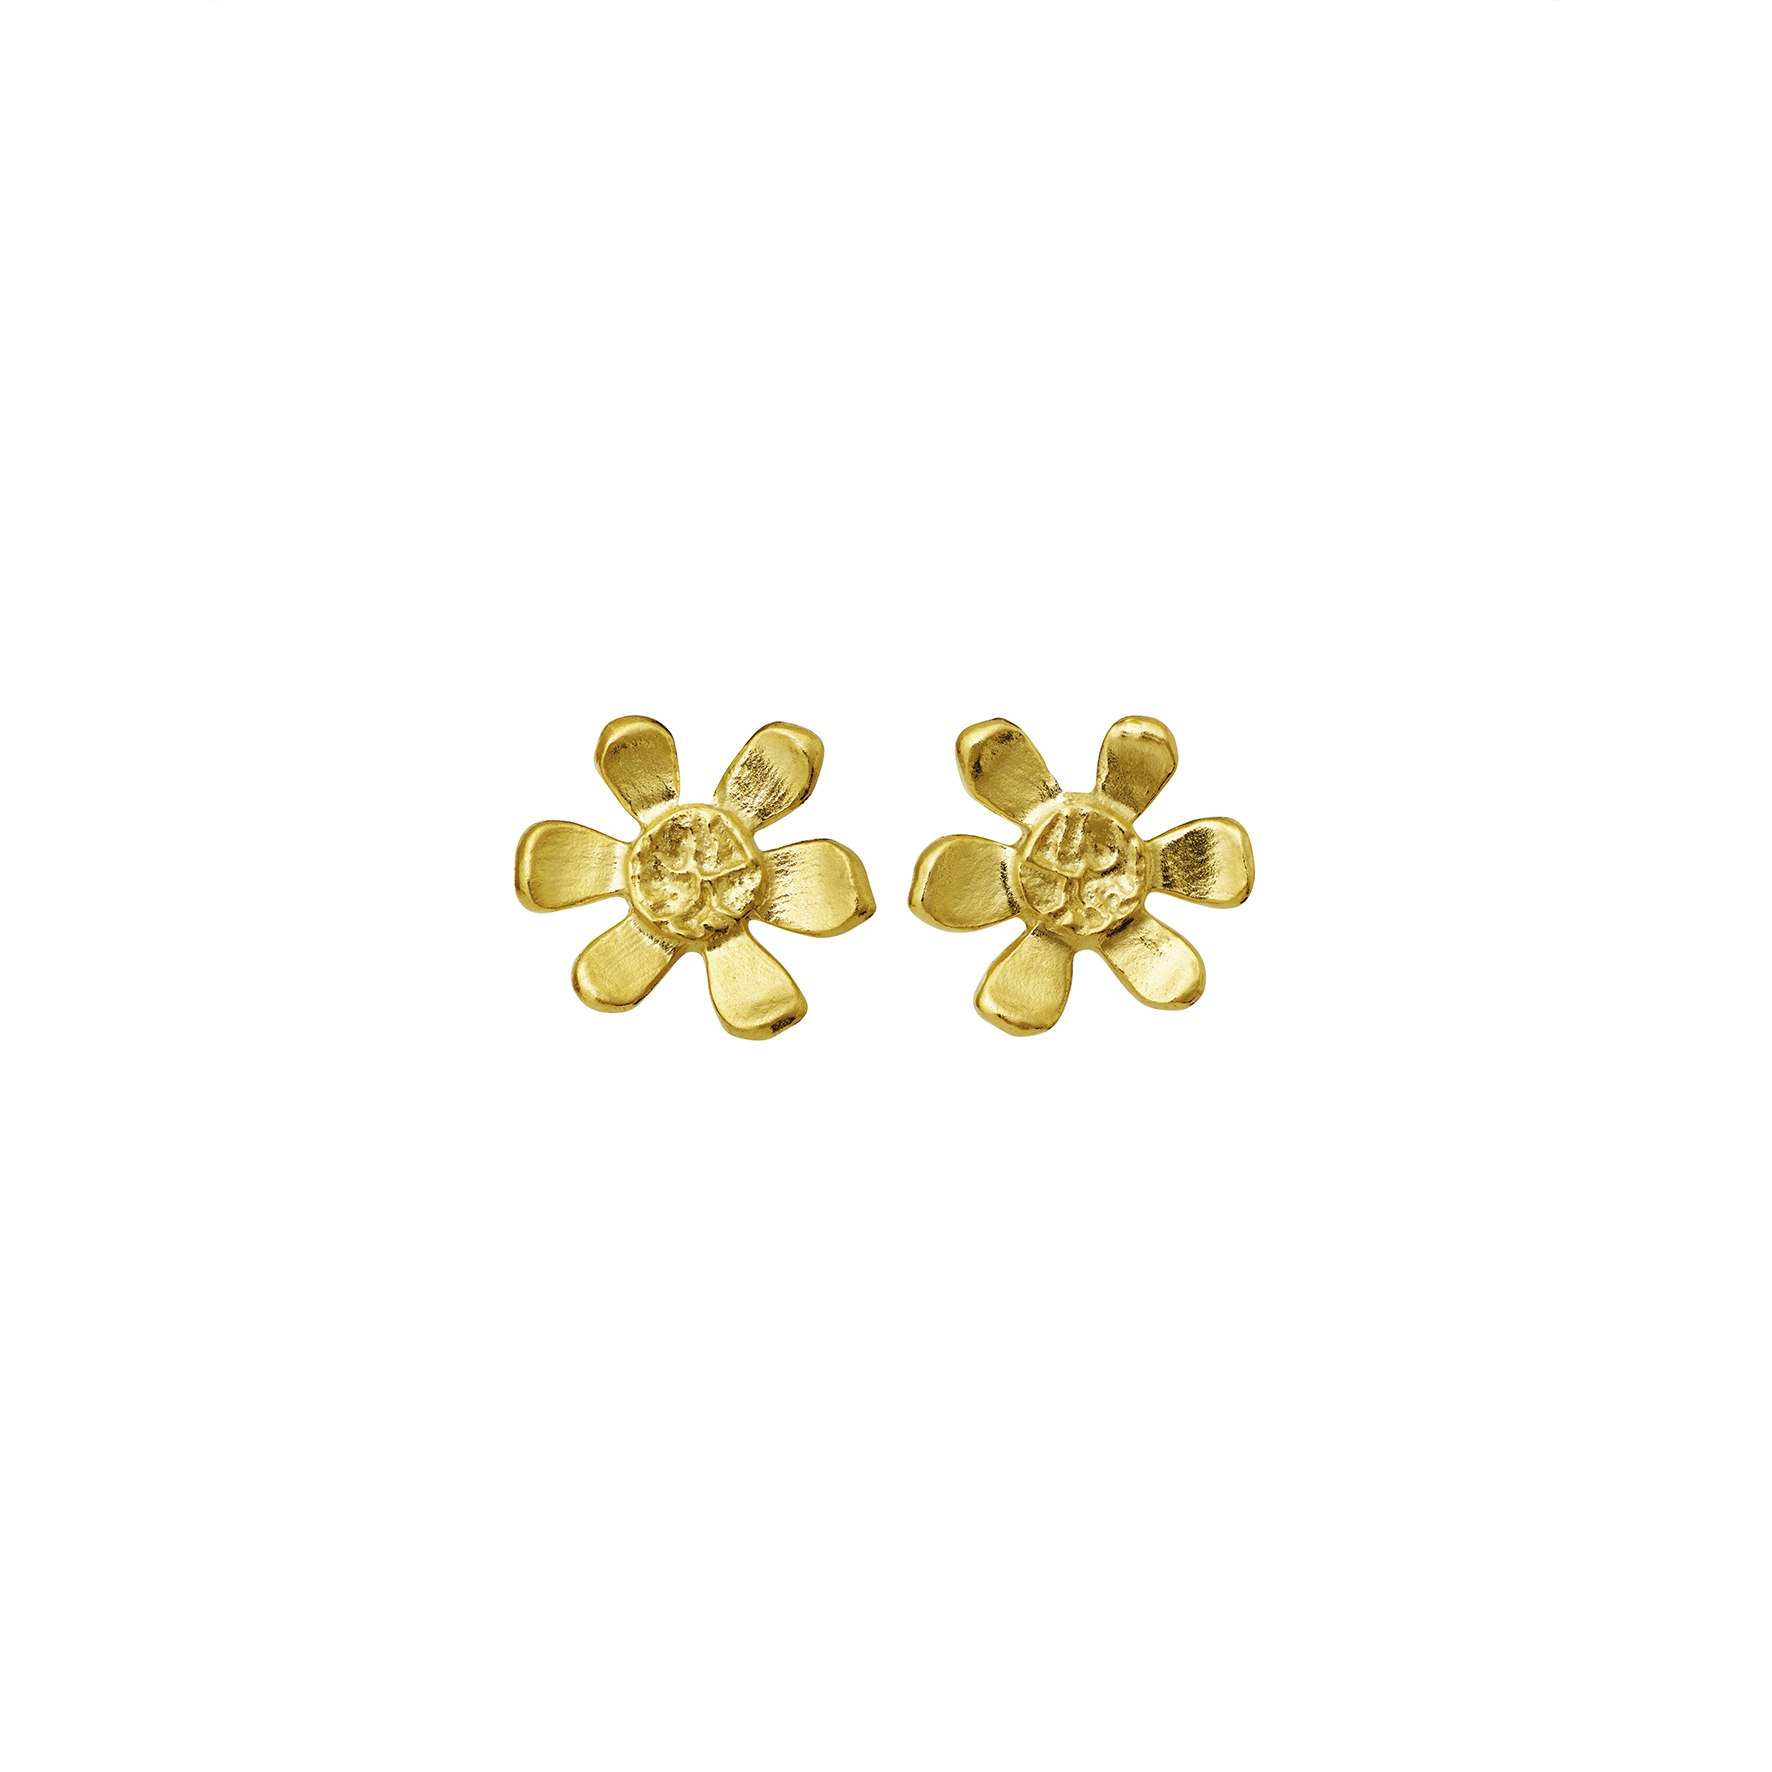 Blossom Earsticks from Maanesten in Goldplated Silver Sterling 925